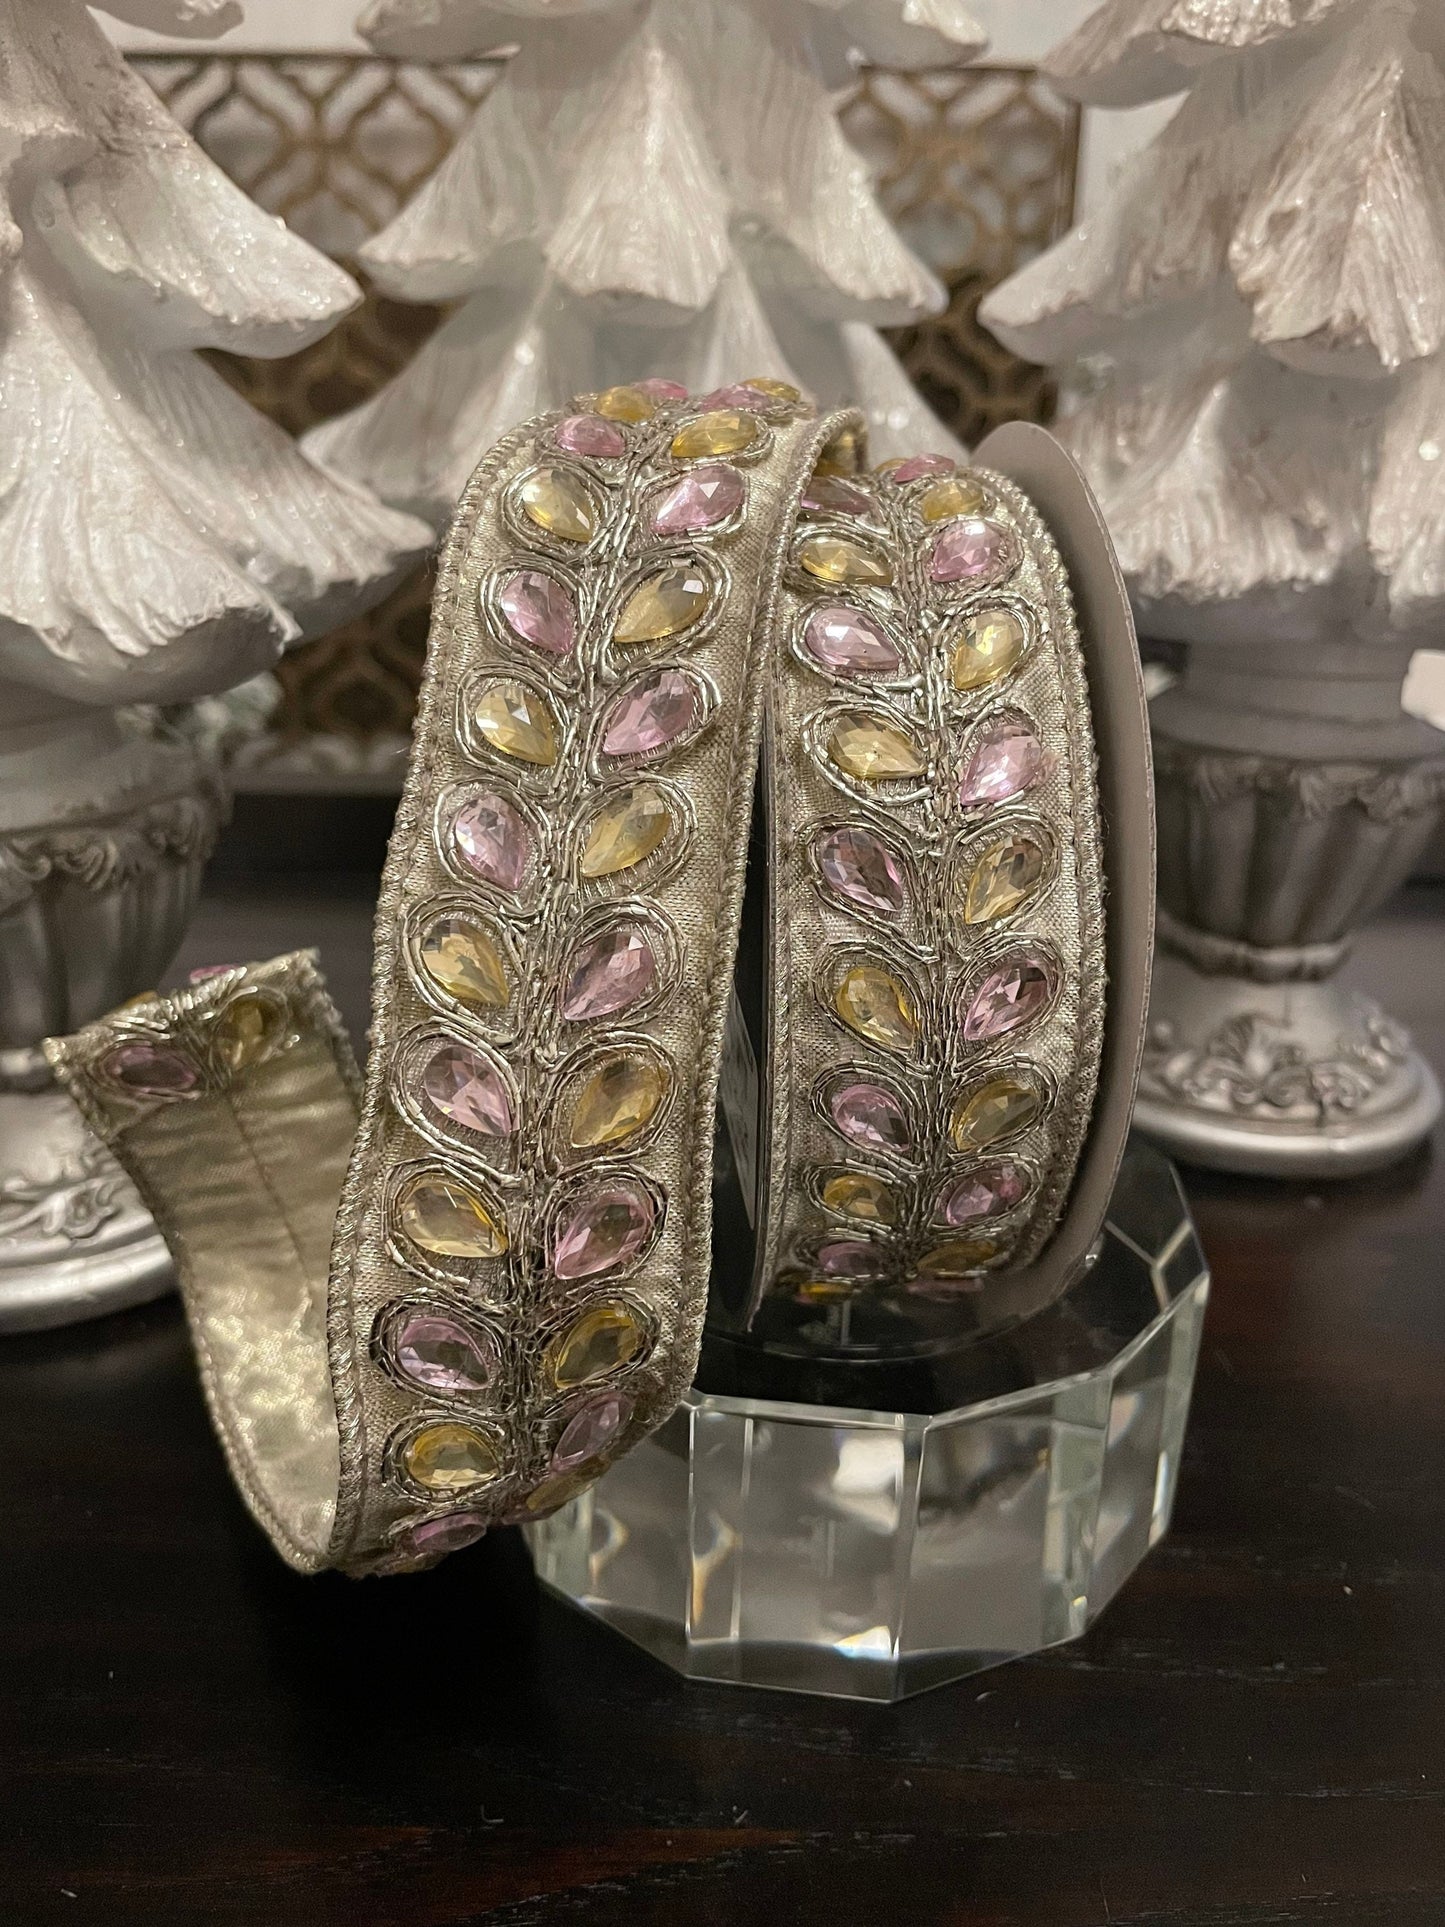 Designer wired pear shape jewel ribbon. 1.25” x 5 yards. Gorgeous!*